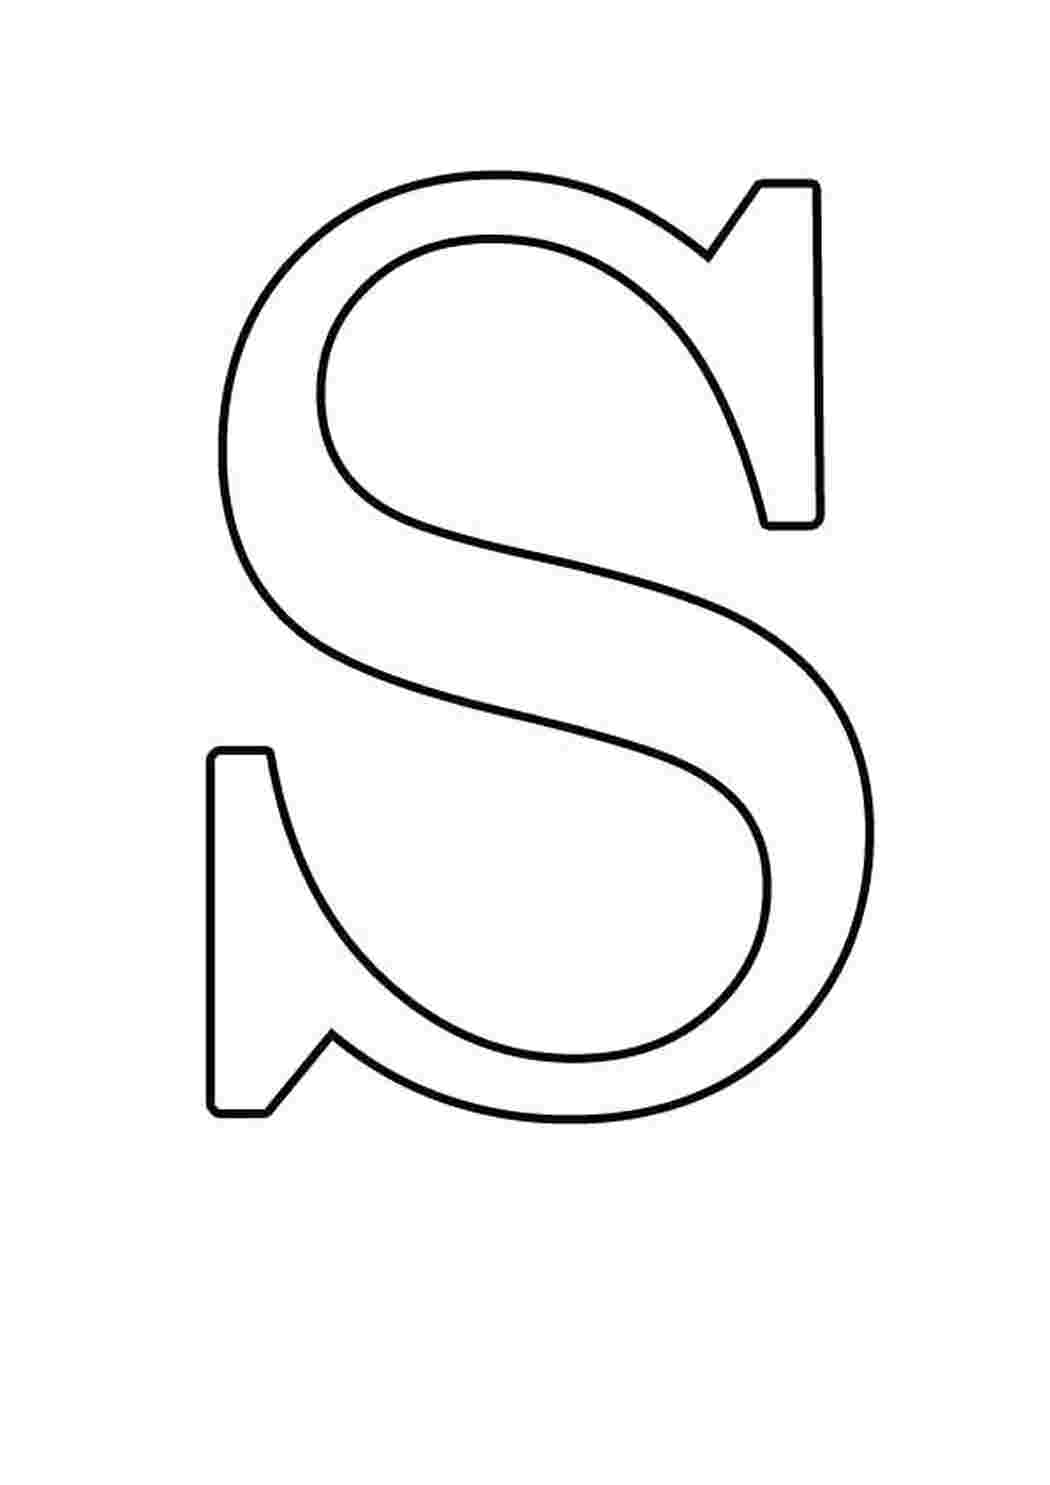 Раскраска Буква S английского алфавита